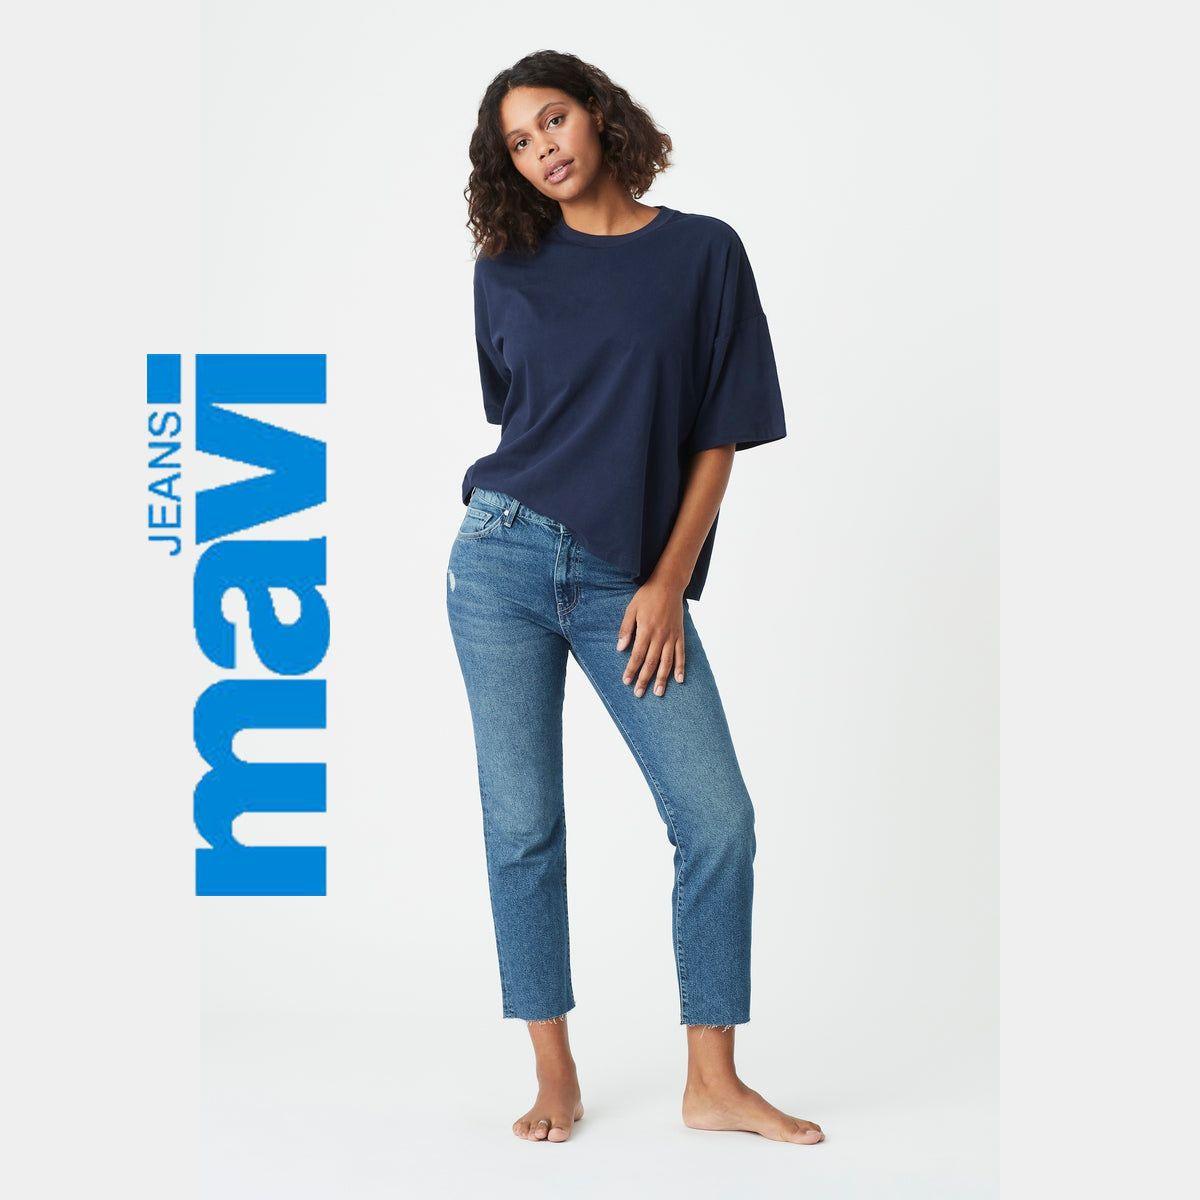 NWT - Mavi Jeans 'Viola' Organic Blue Denim Jeans -Size 27/27